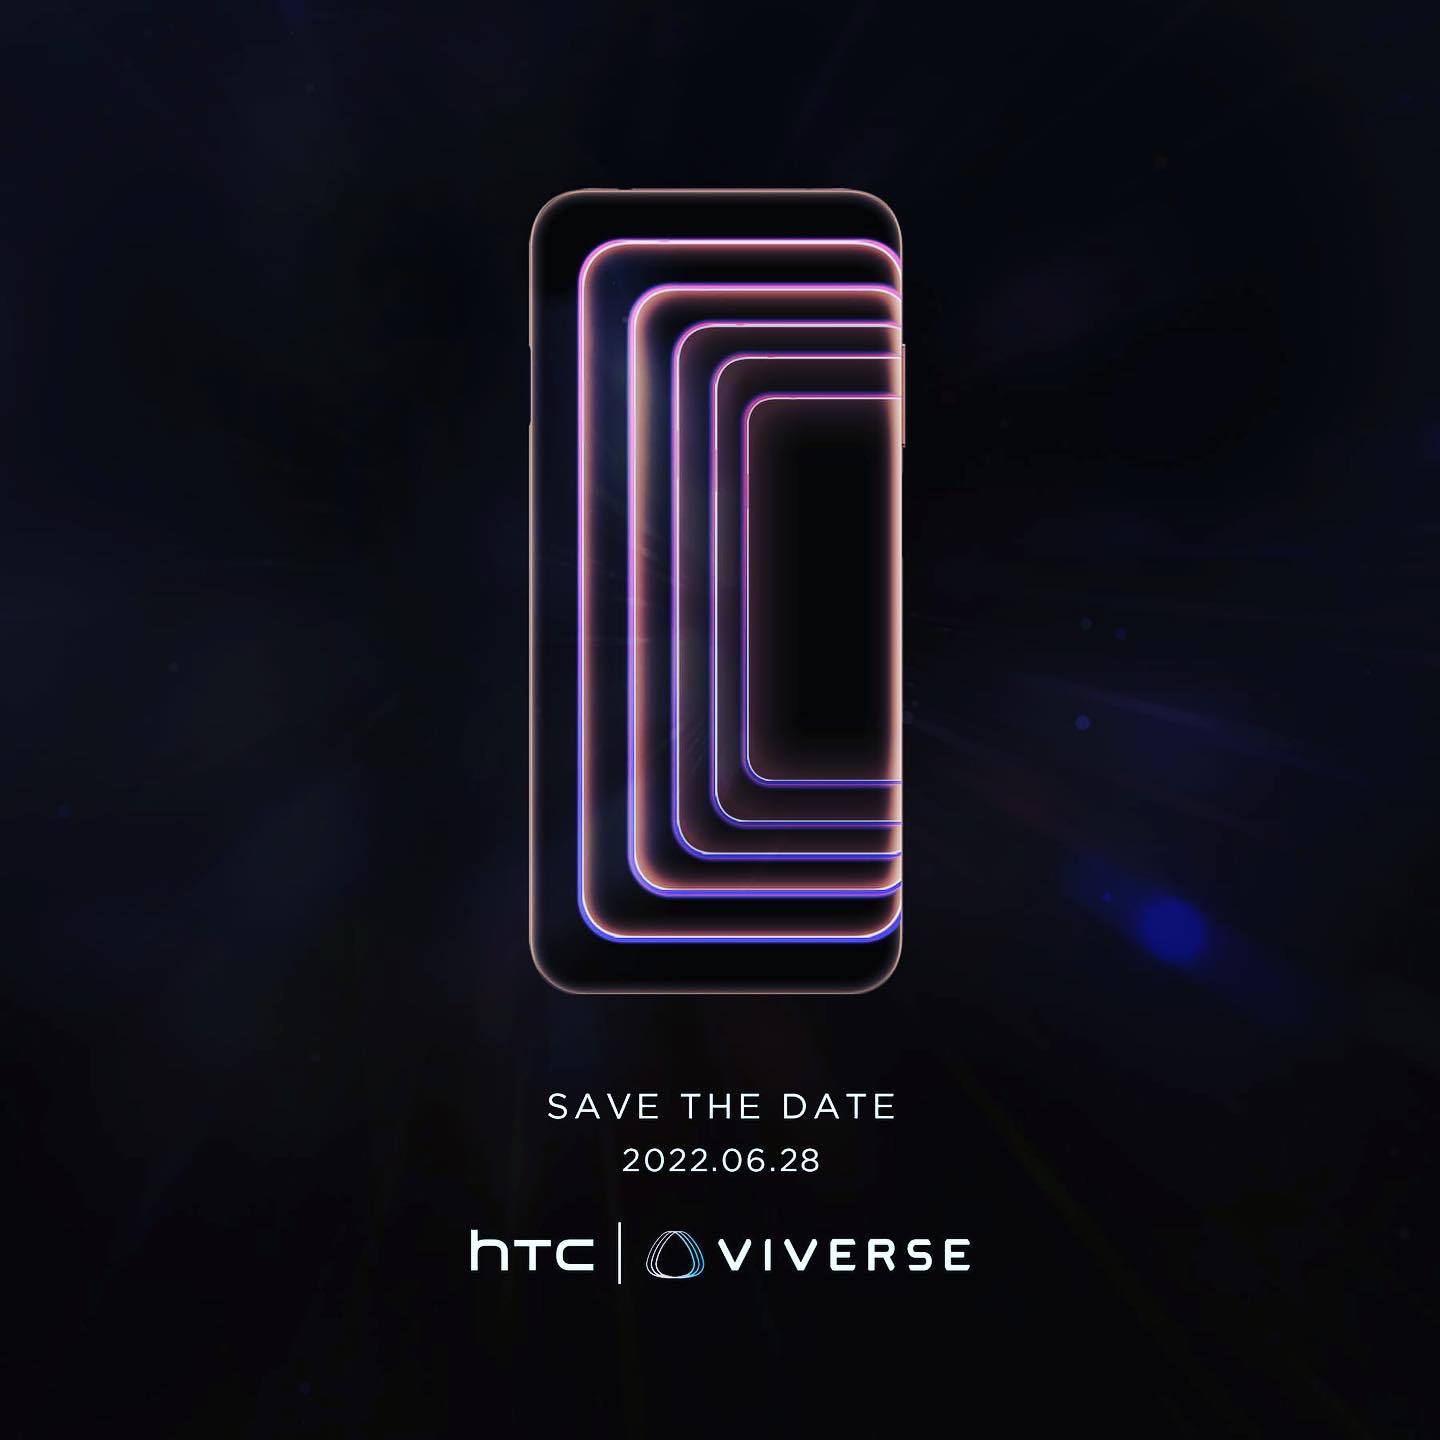 HTC Viverse phone teaser